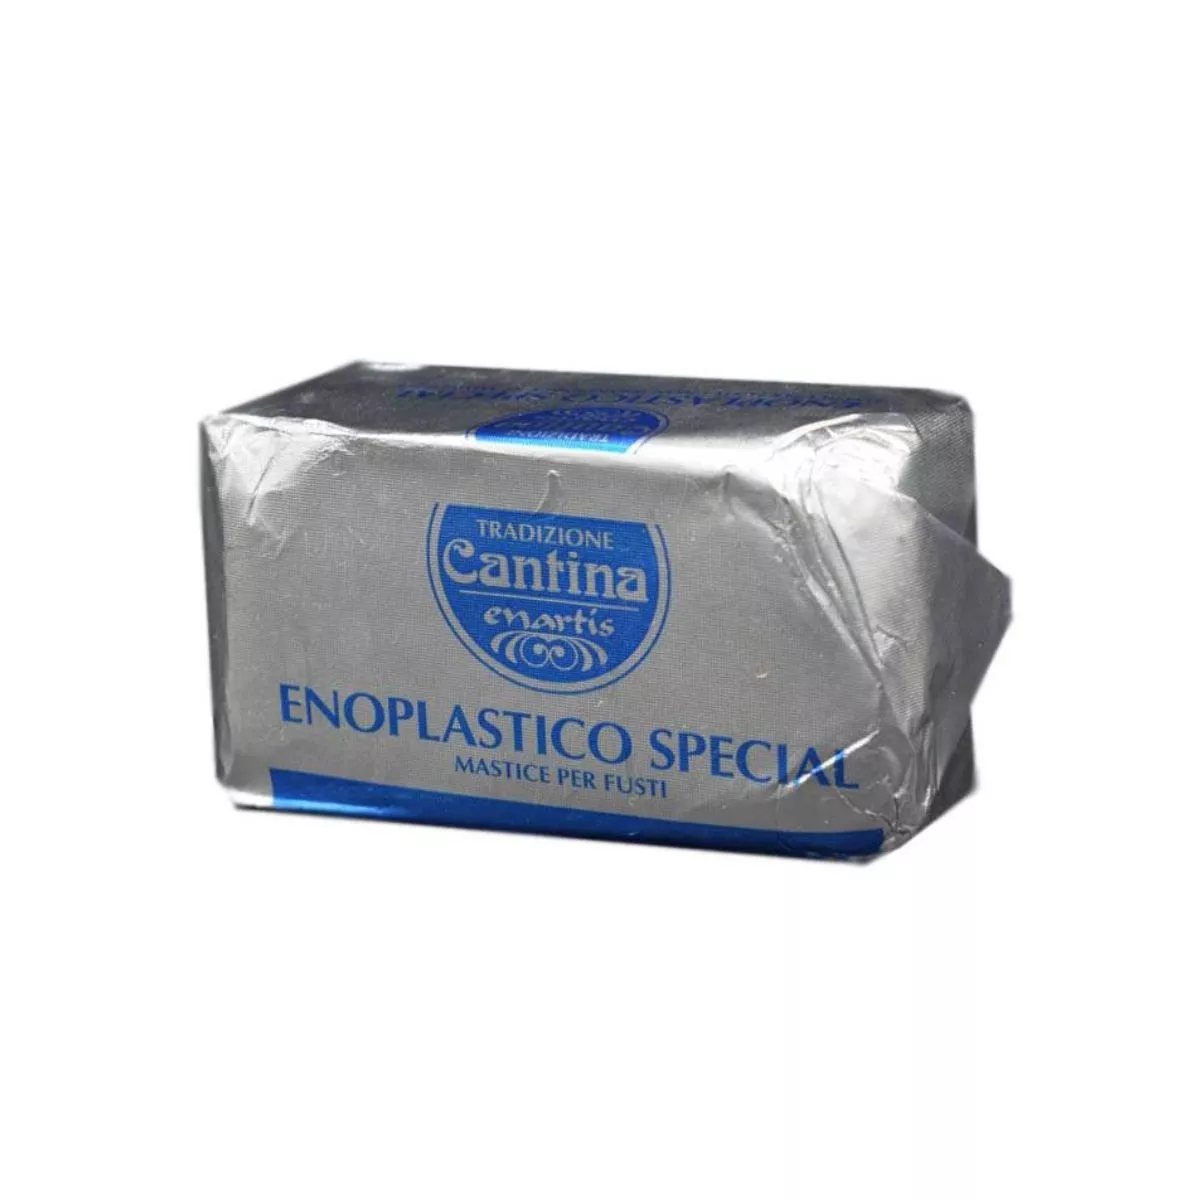 Mastic enoplastic special pentru butoaie, 0.5 kilograme 1